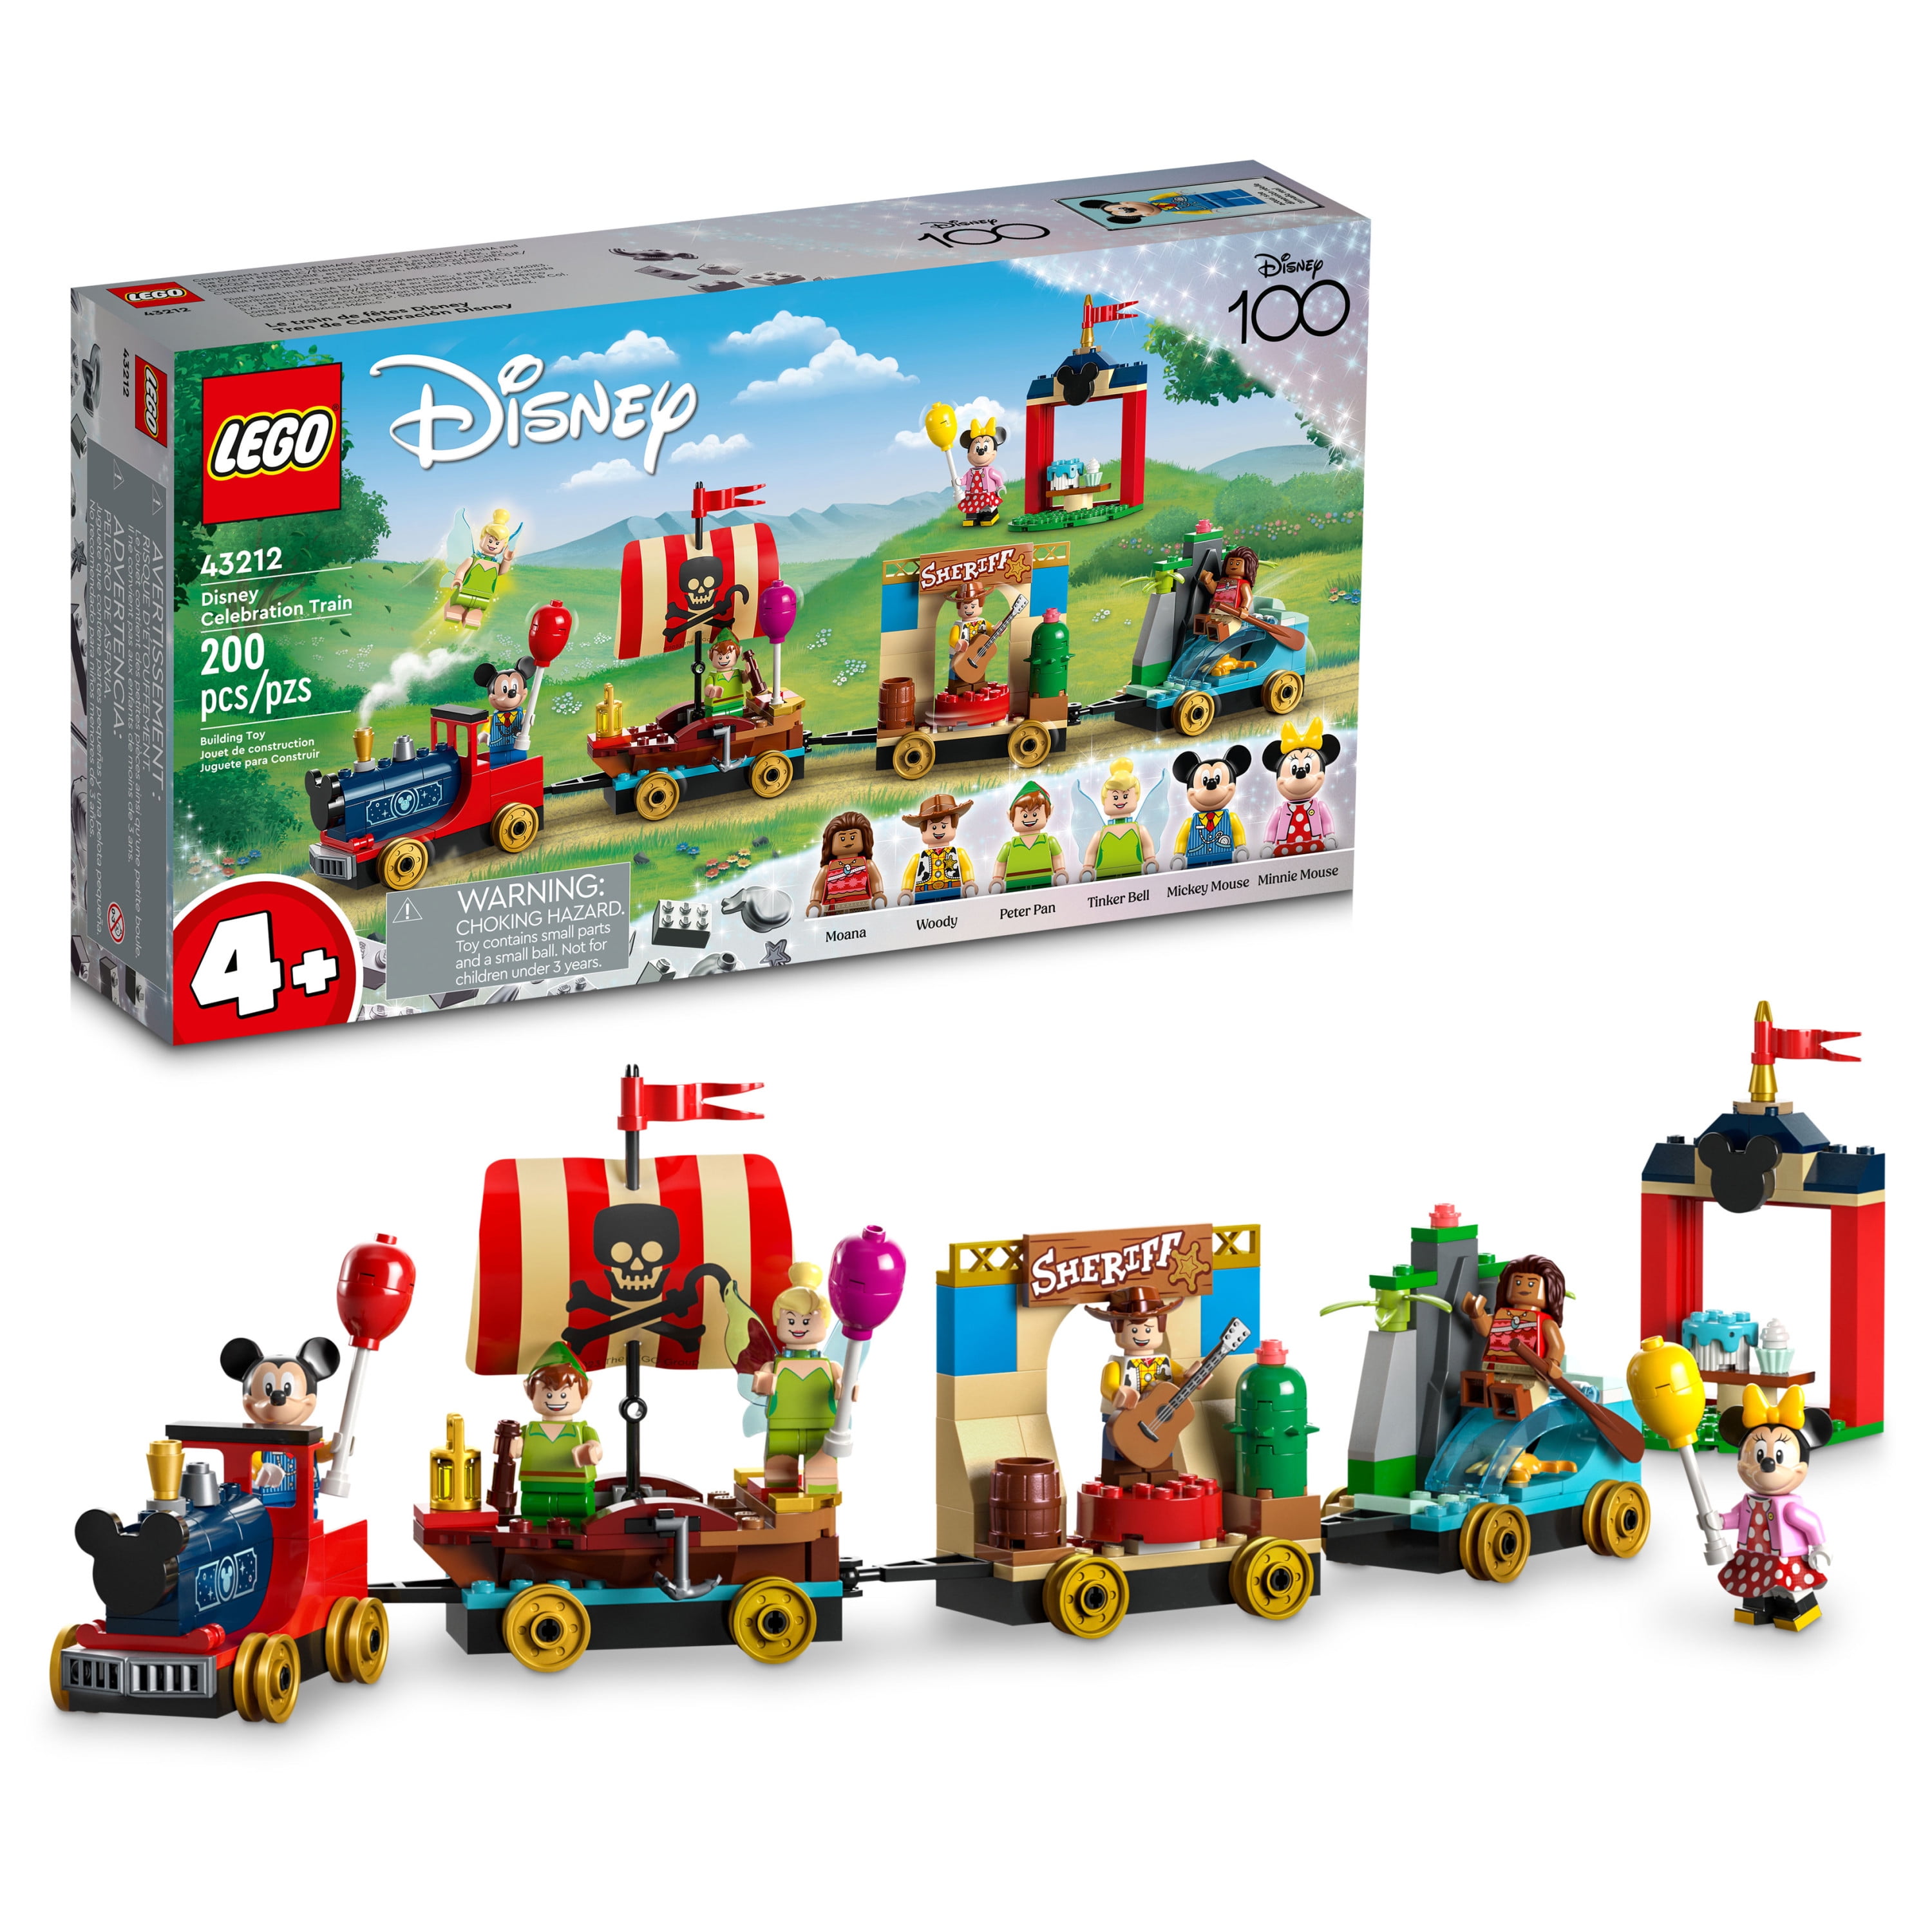 Lego Disney 100 Celebration Train 43212 Building Toy Imaginative Play